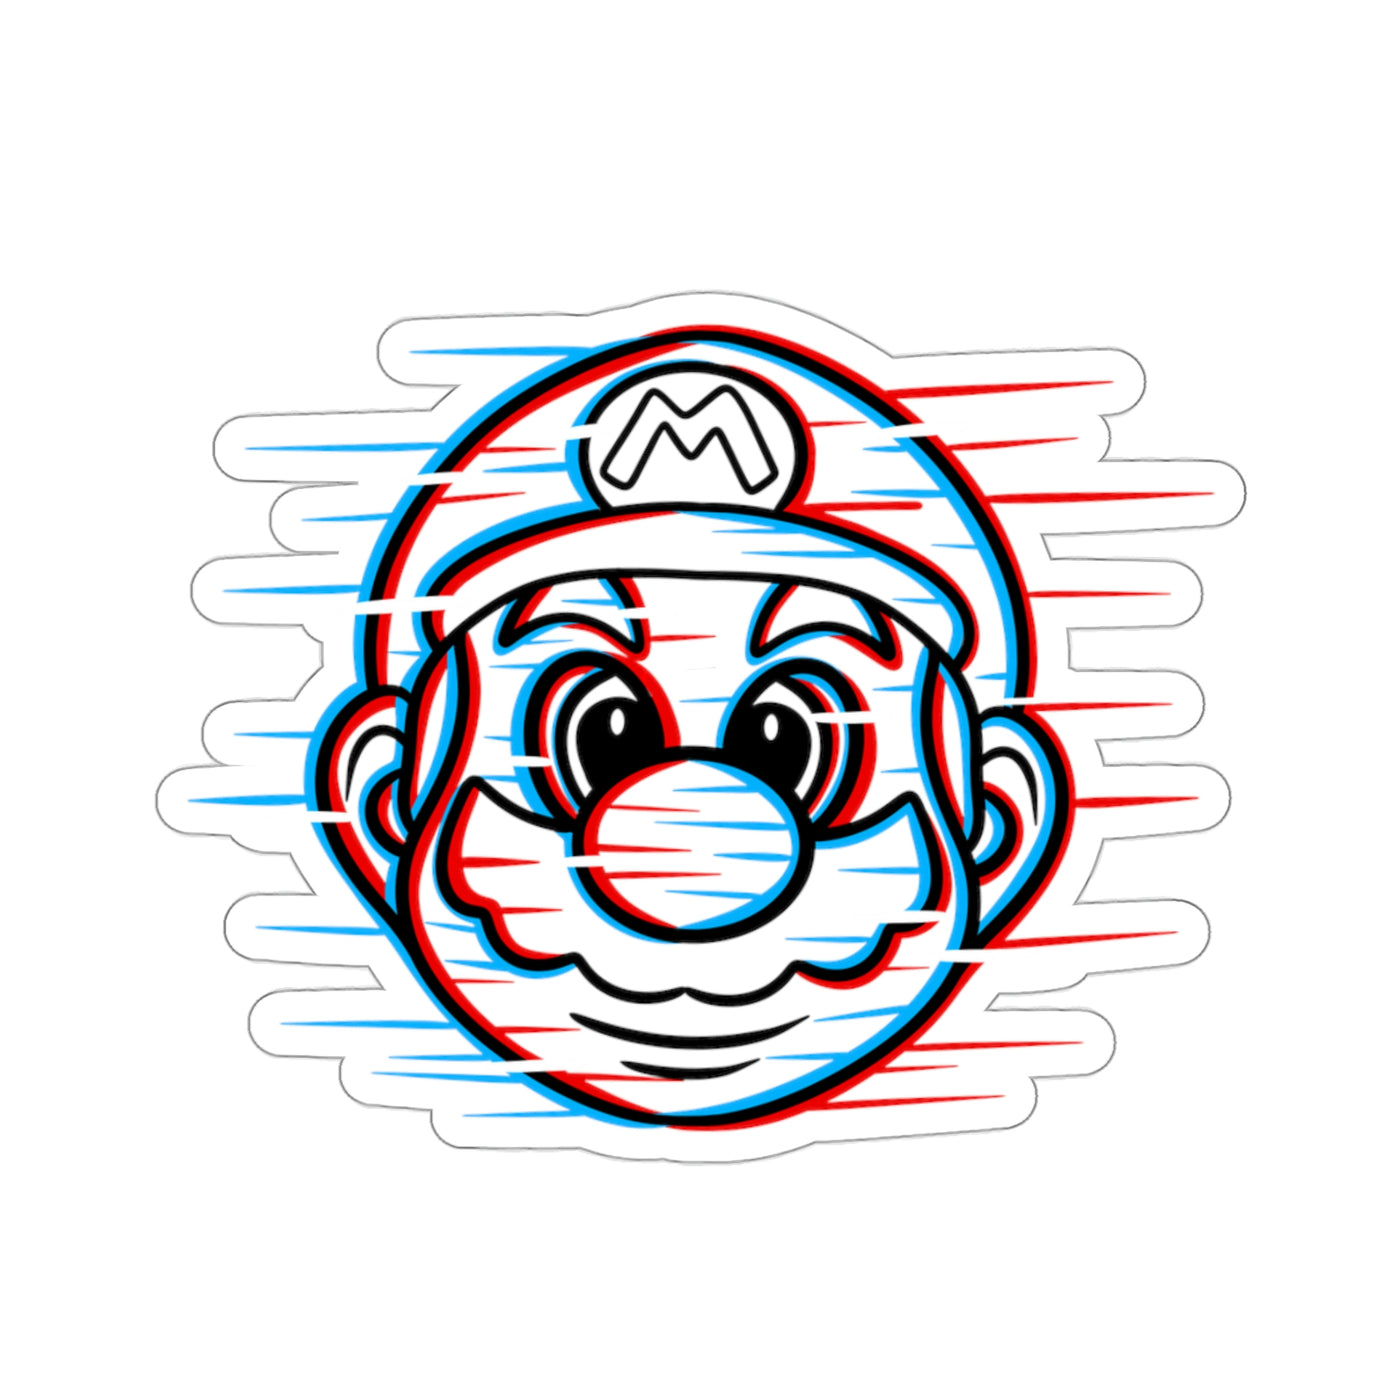 Mario Glitch Doodle Art Sticker